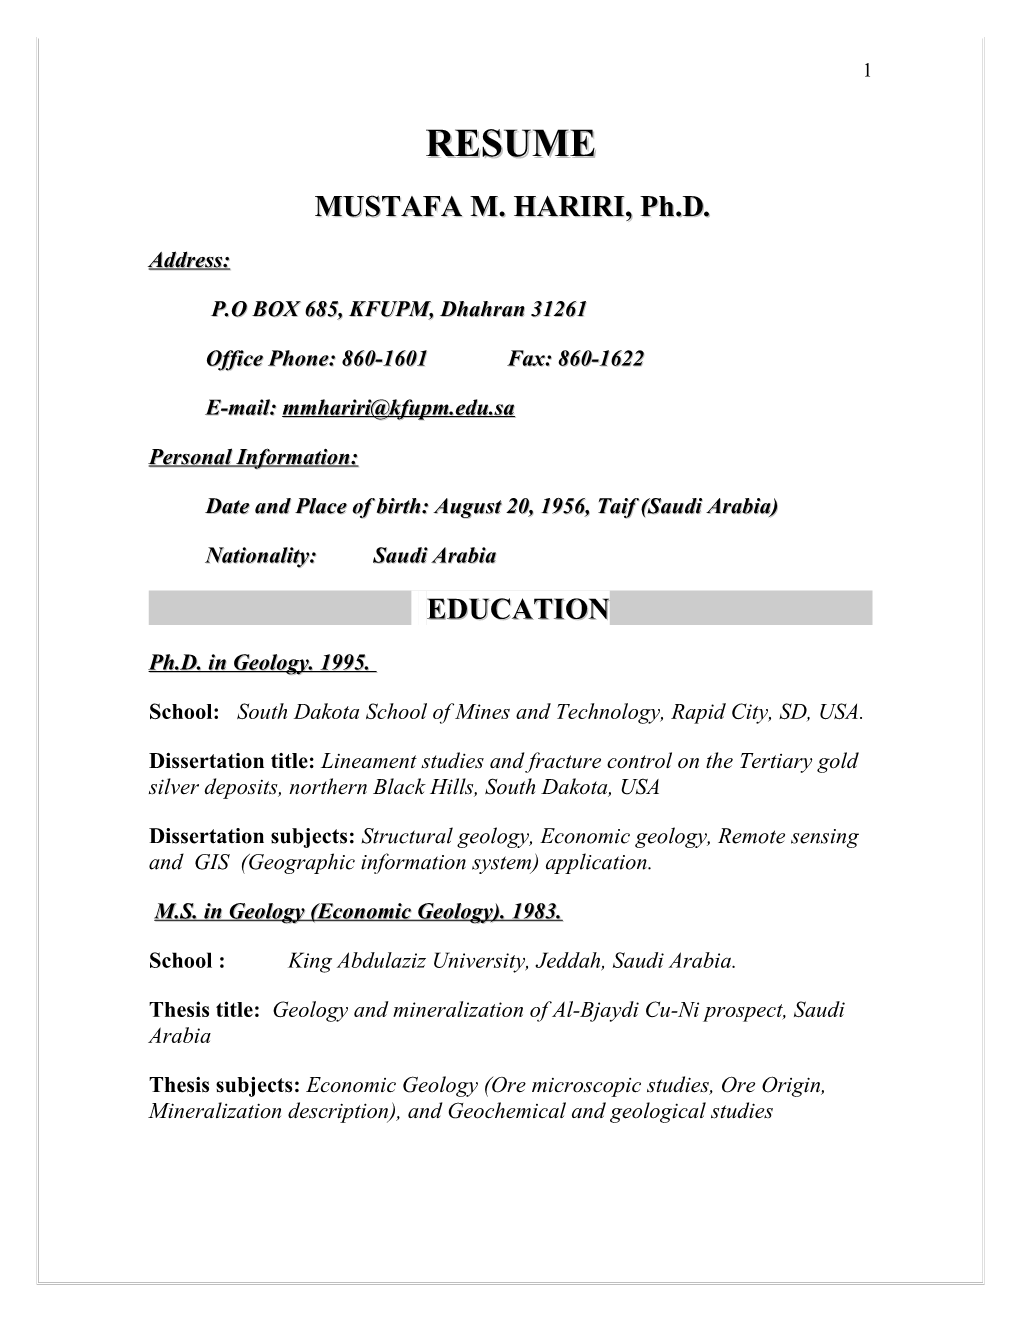 MUSTAFA M. HARIRI, Ph.D s2